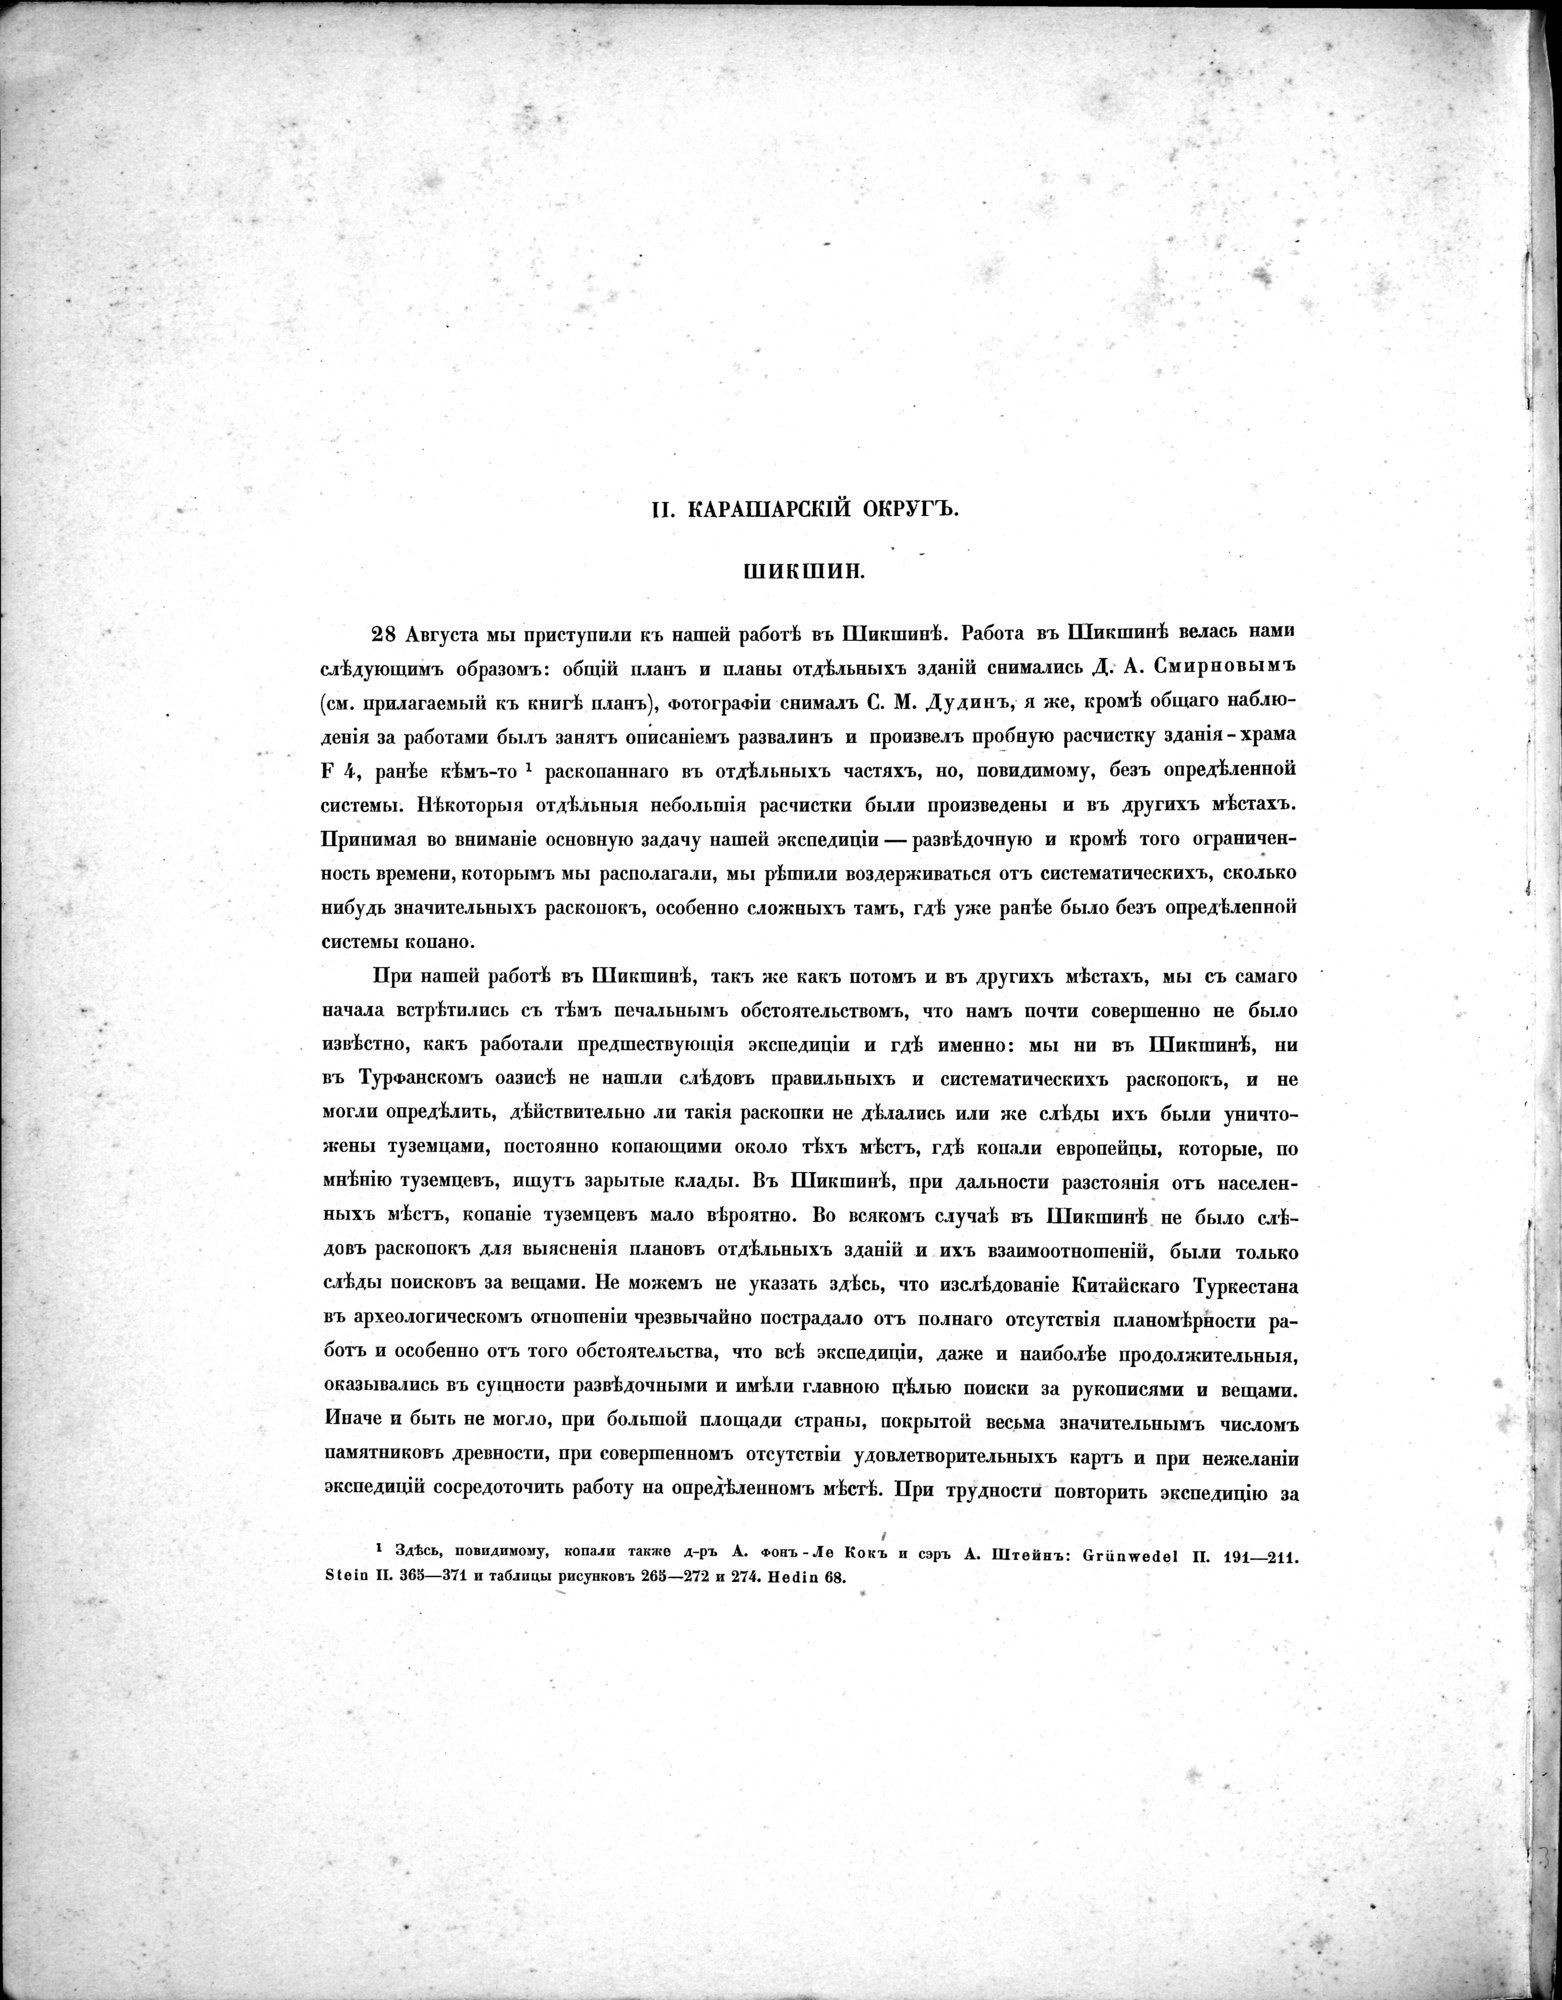 Russkaia Turkestanskaia Ekspeditsiia, 1909-1910 goda : vol.1 / Page 14 (Grayscale High Resolution Image)